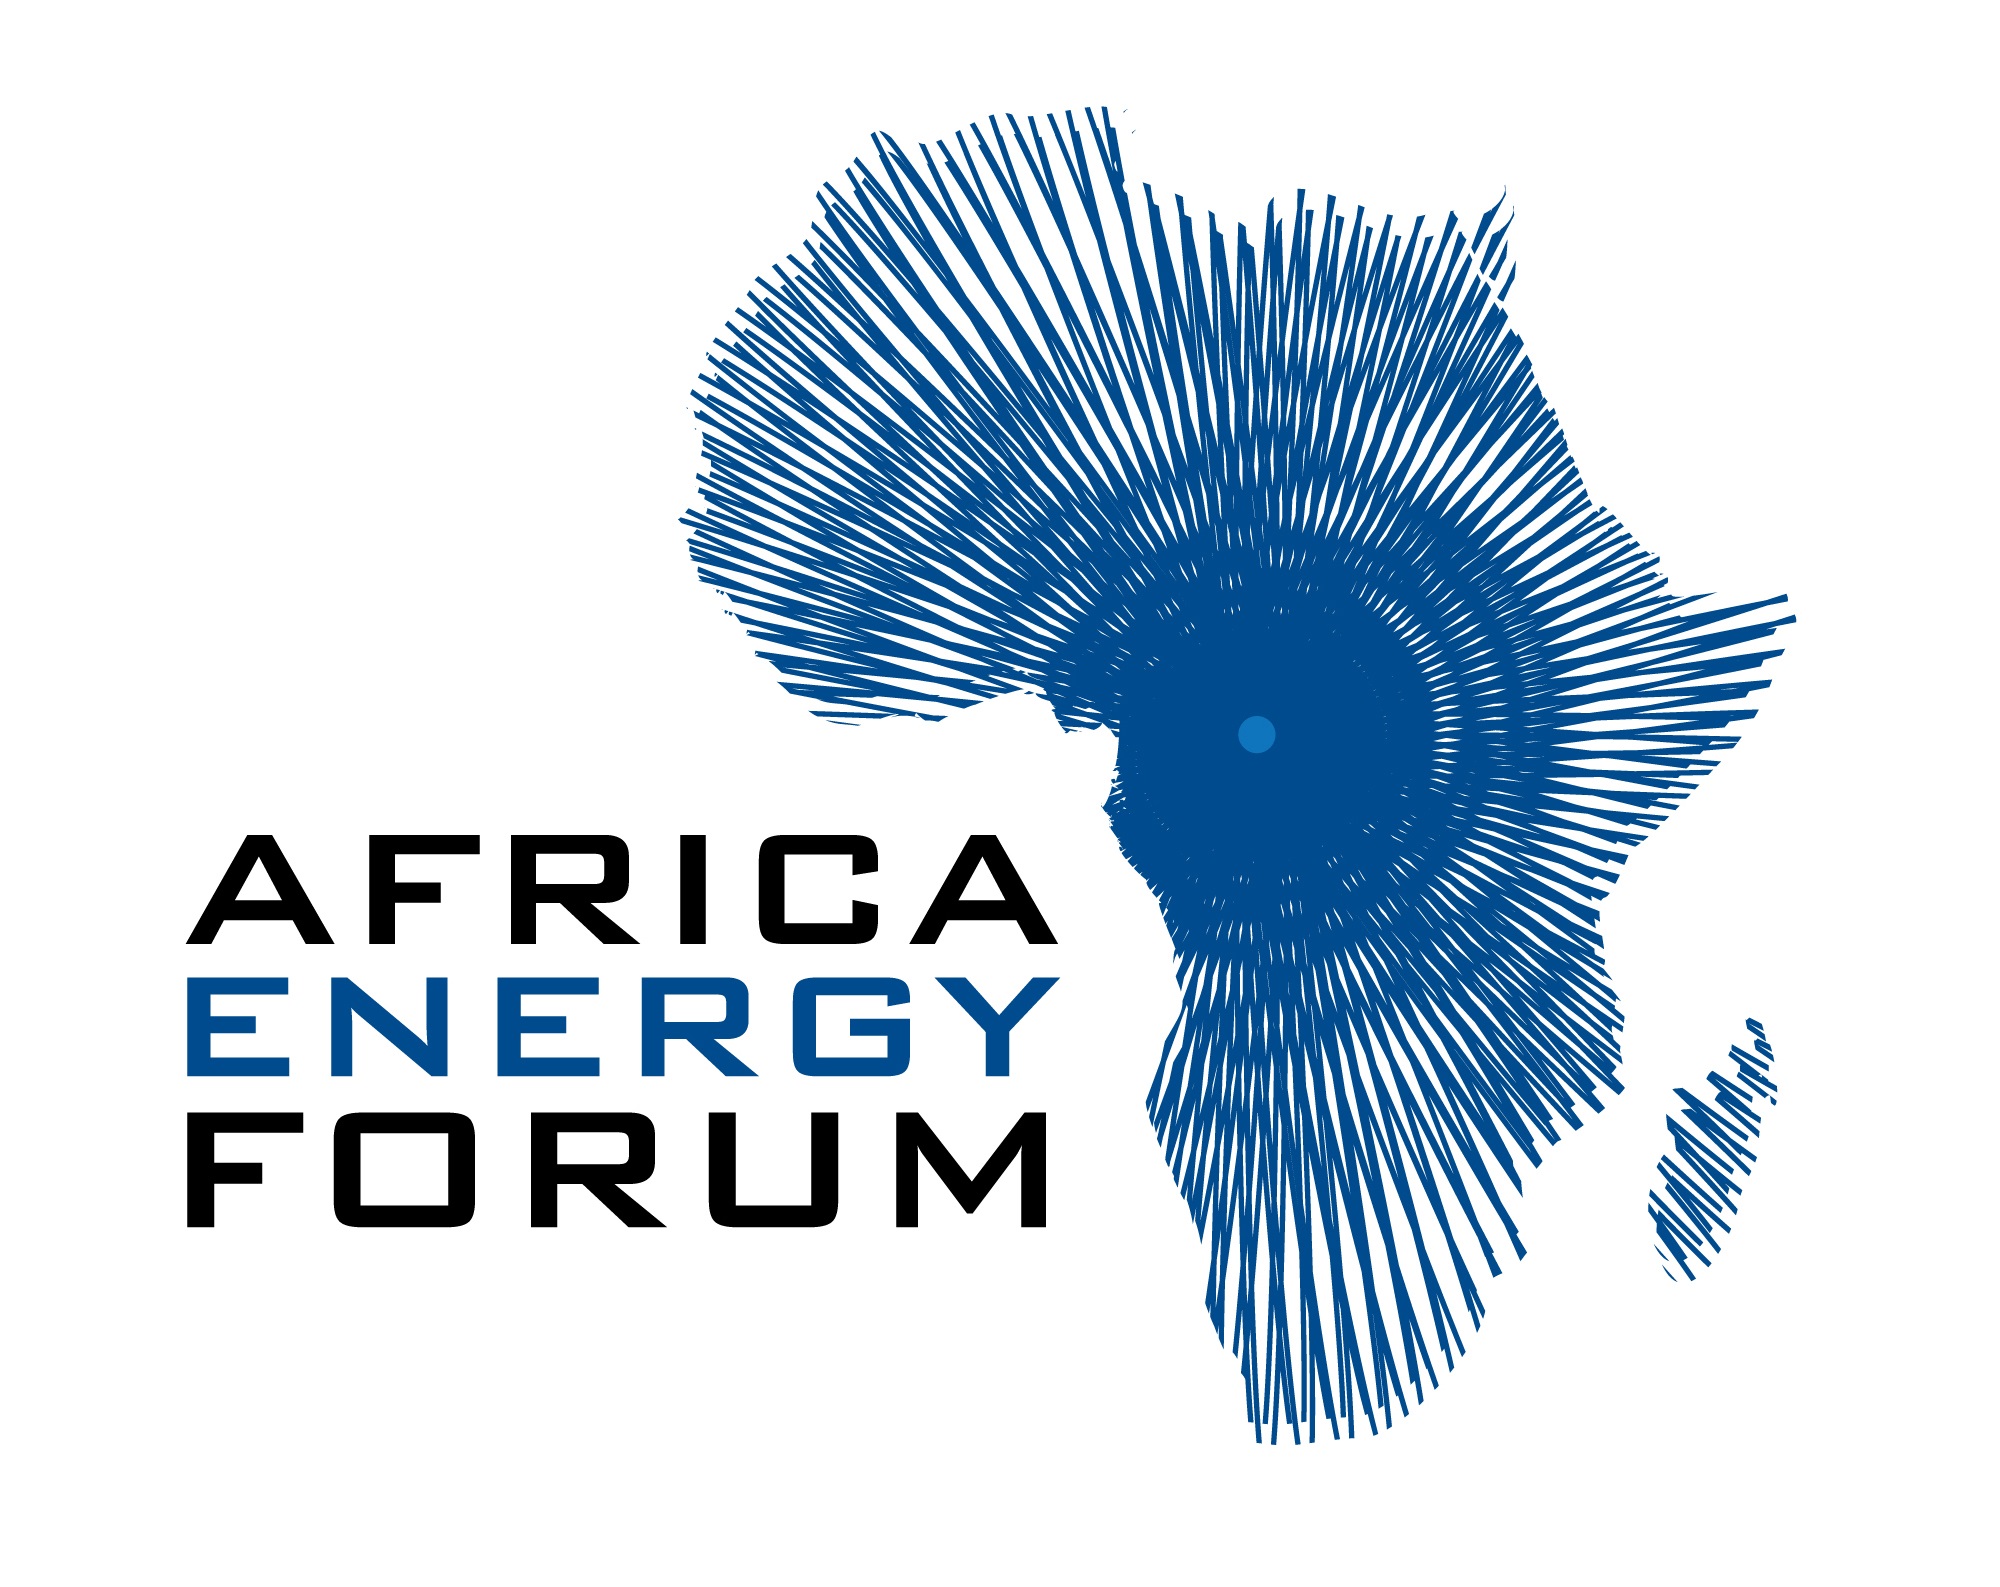 THE AFRICA ENERGY FORUM